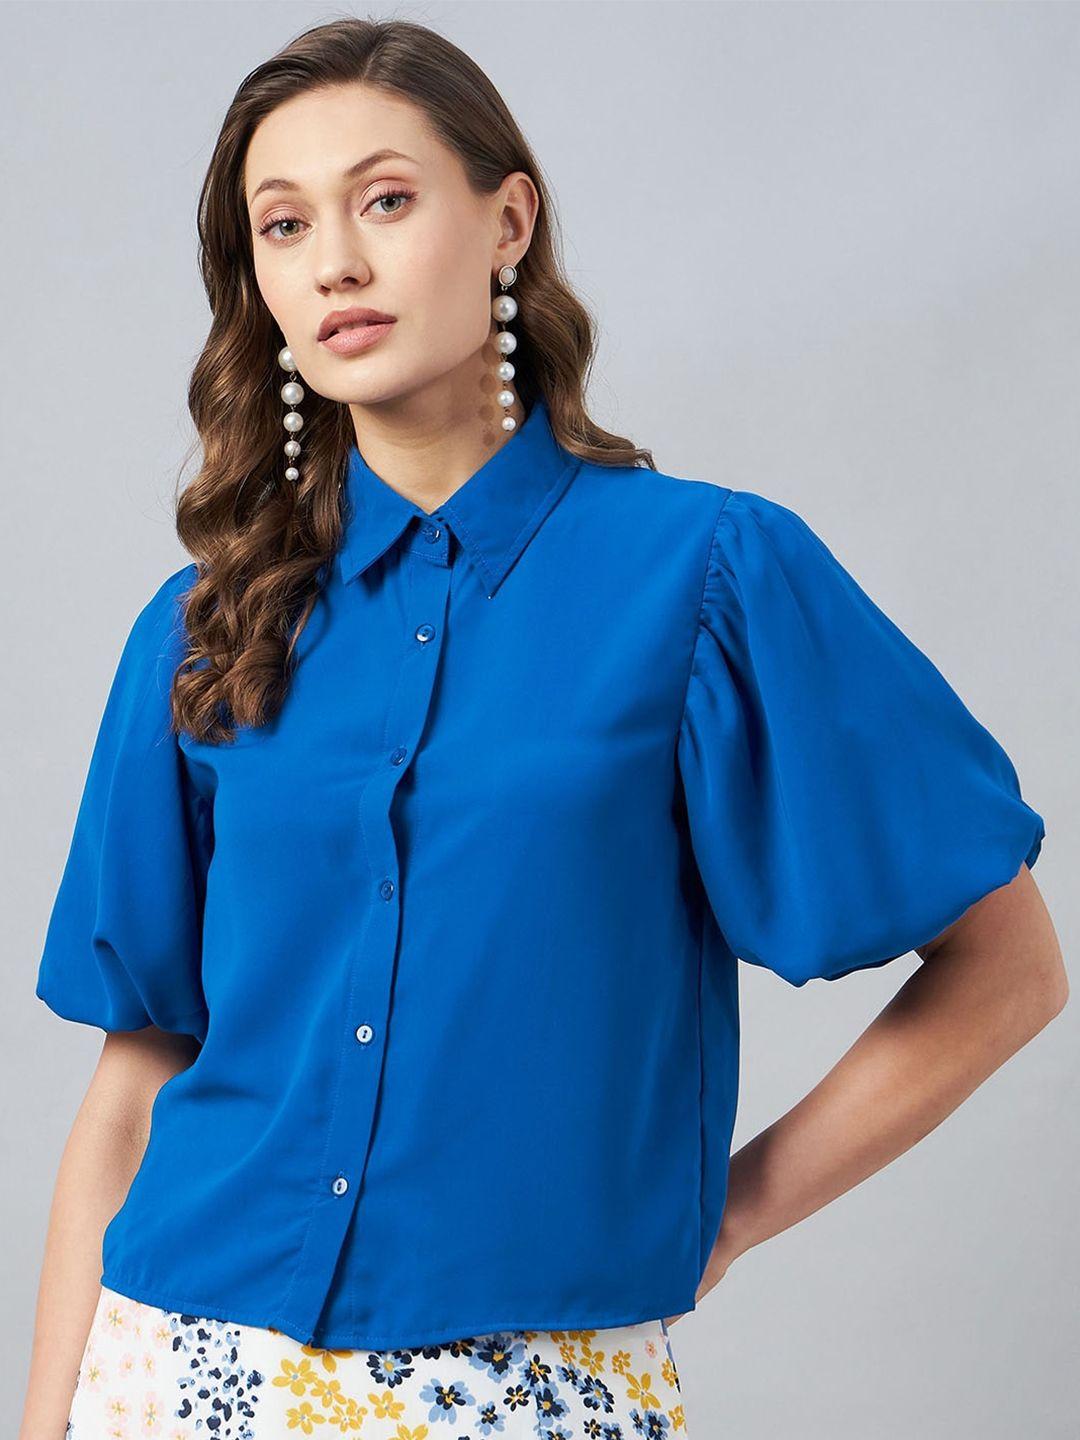 carlton-london-blue-georgette-shirt-style-top